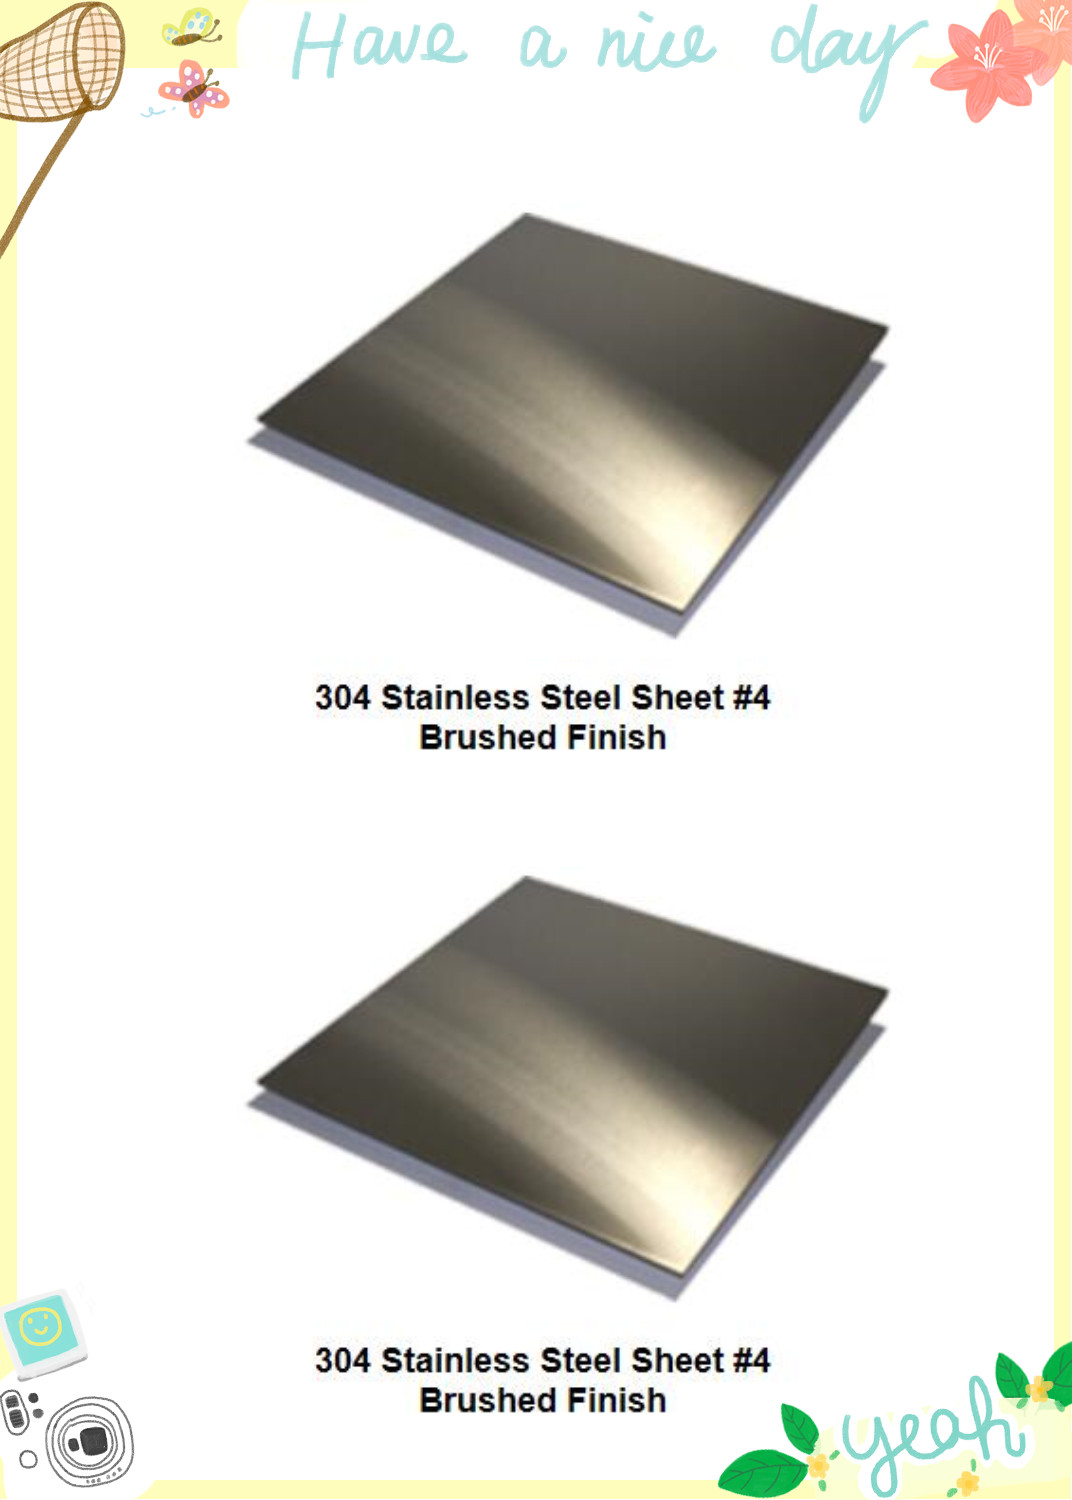 304 Stainless Steel Sheet #4 Brushed Finish